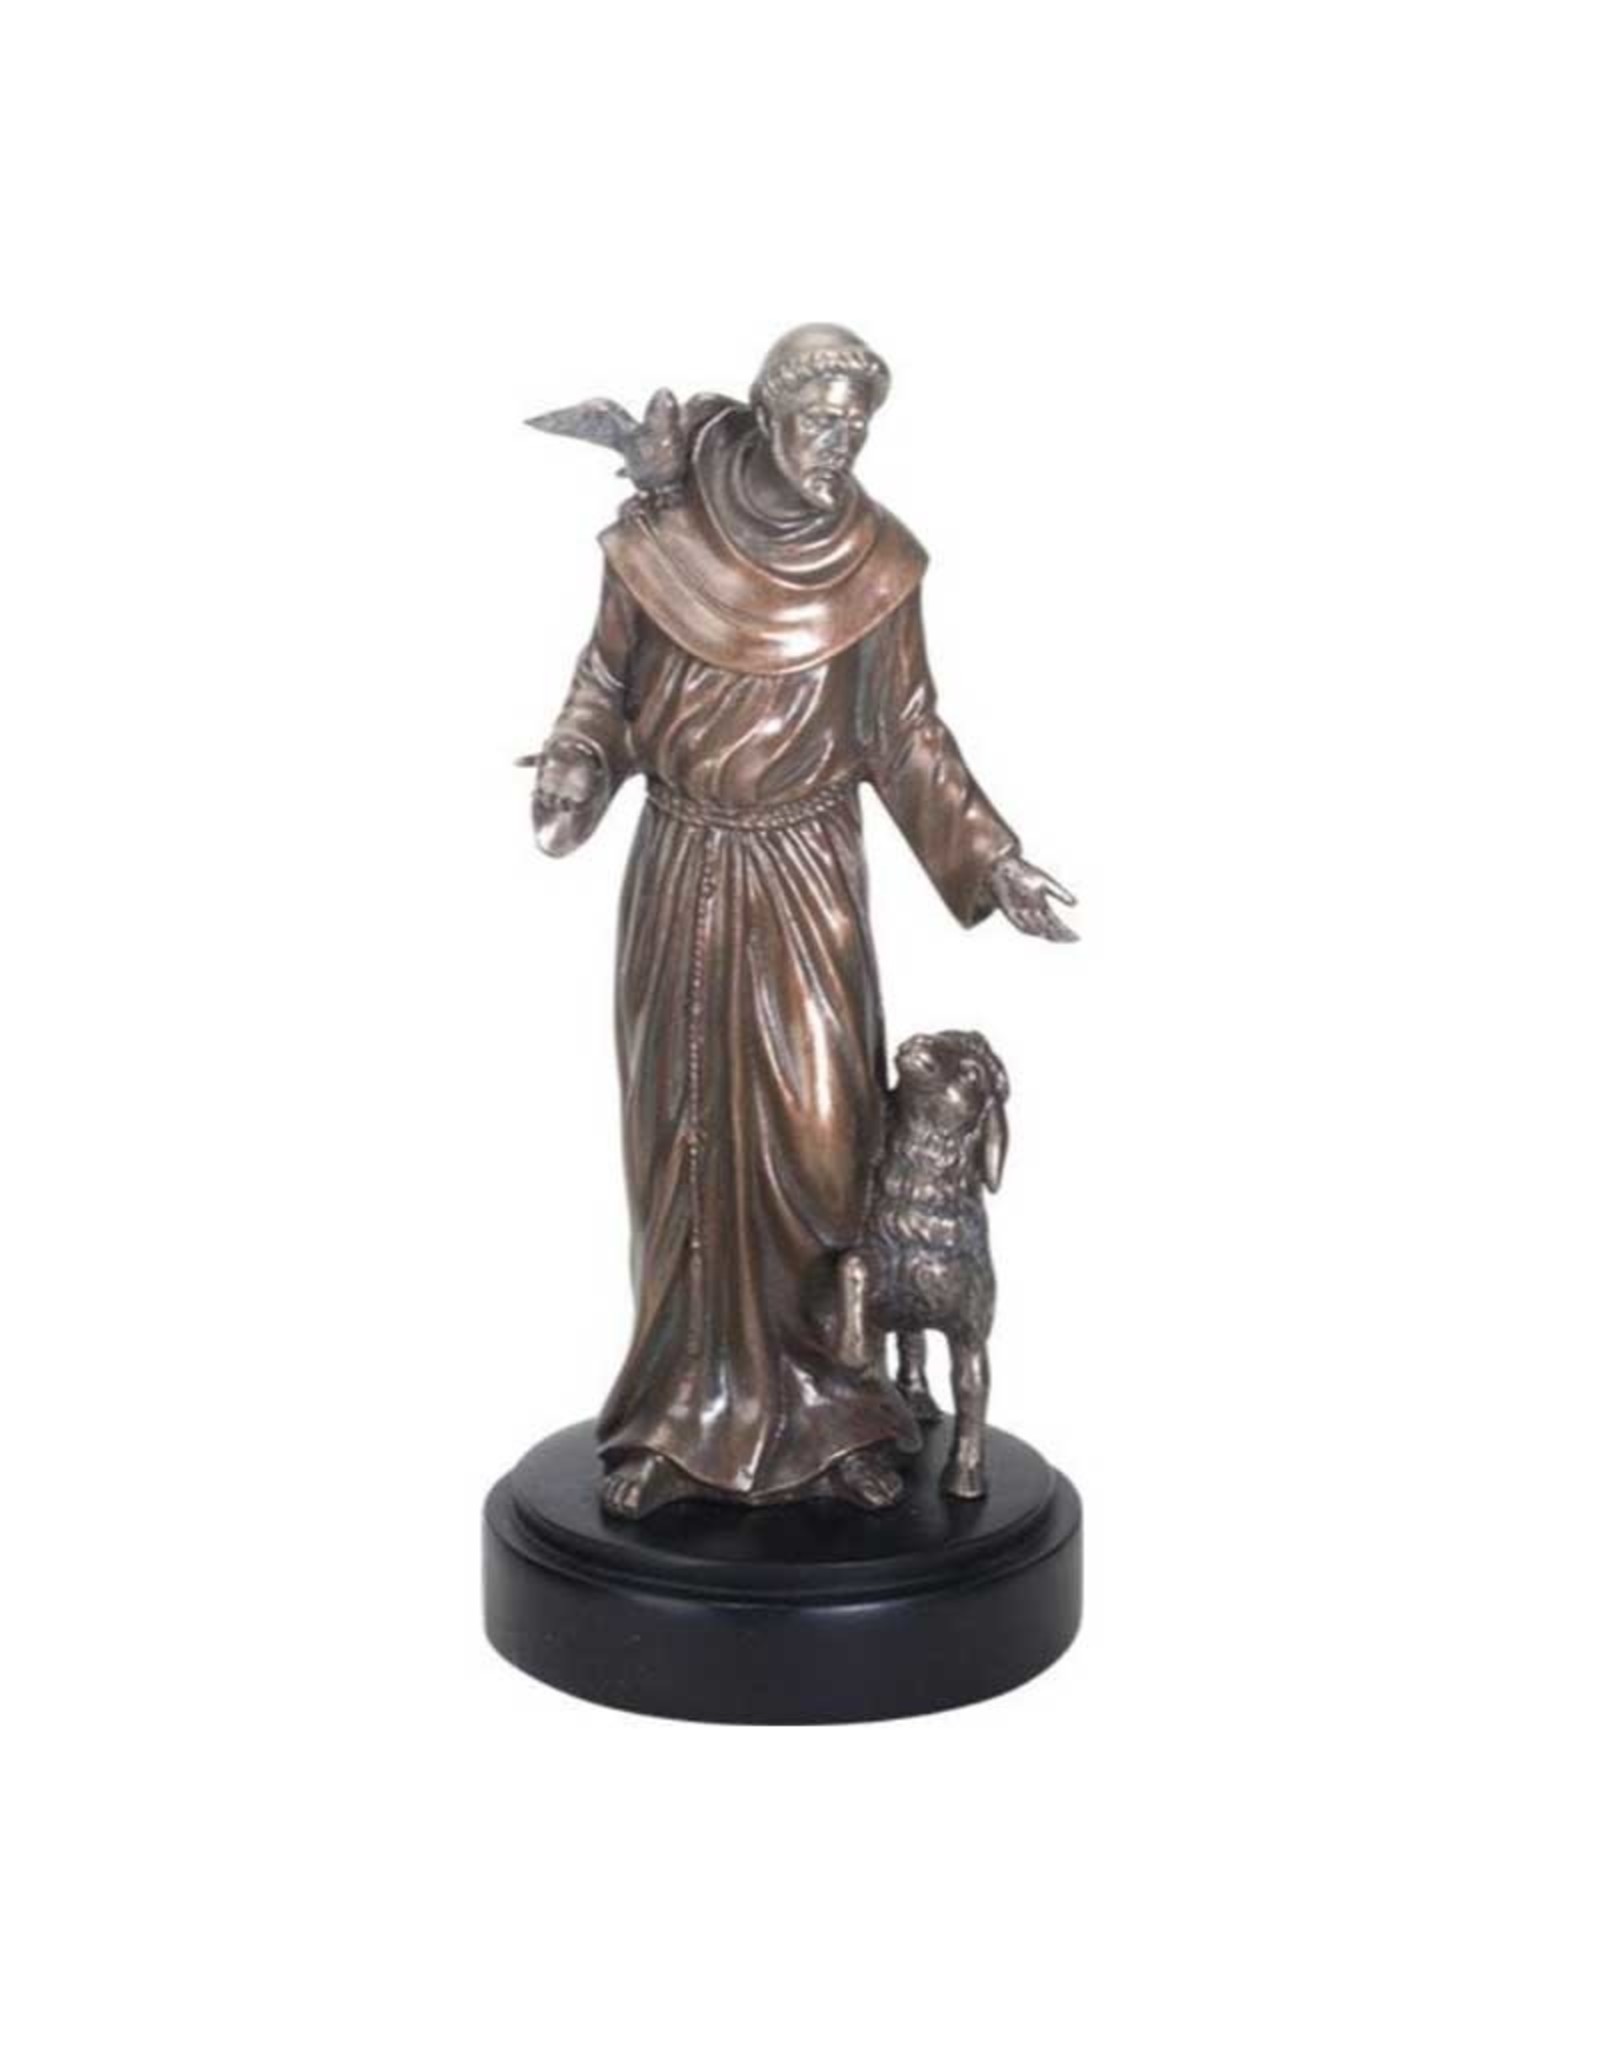 Summit St. Francis (Bronze) - 7.5" Statue